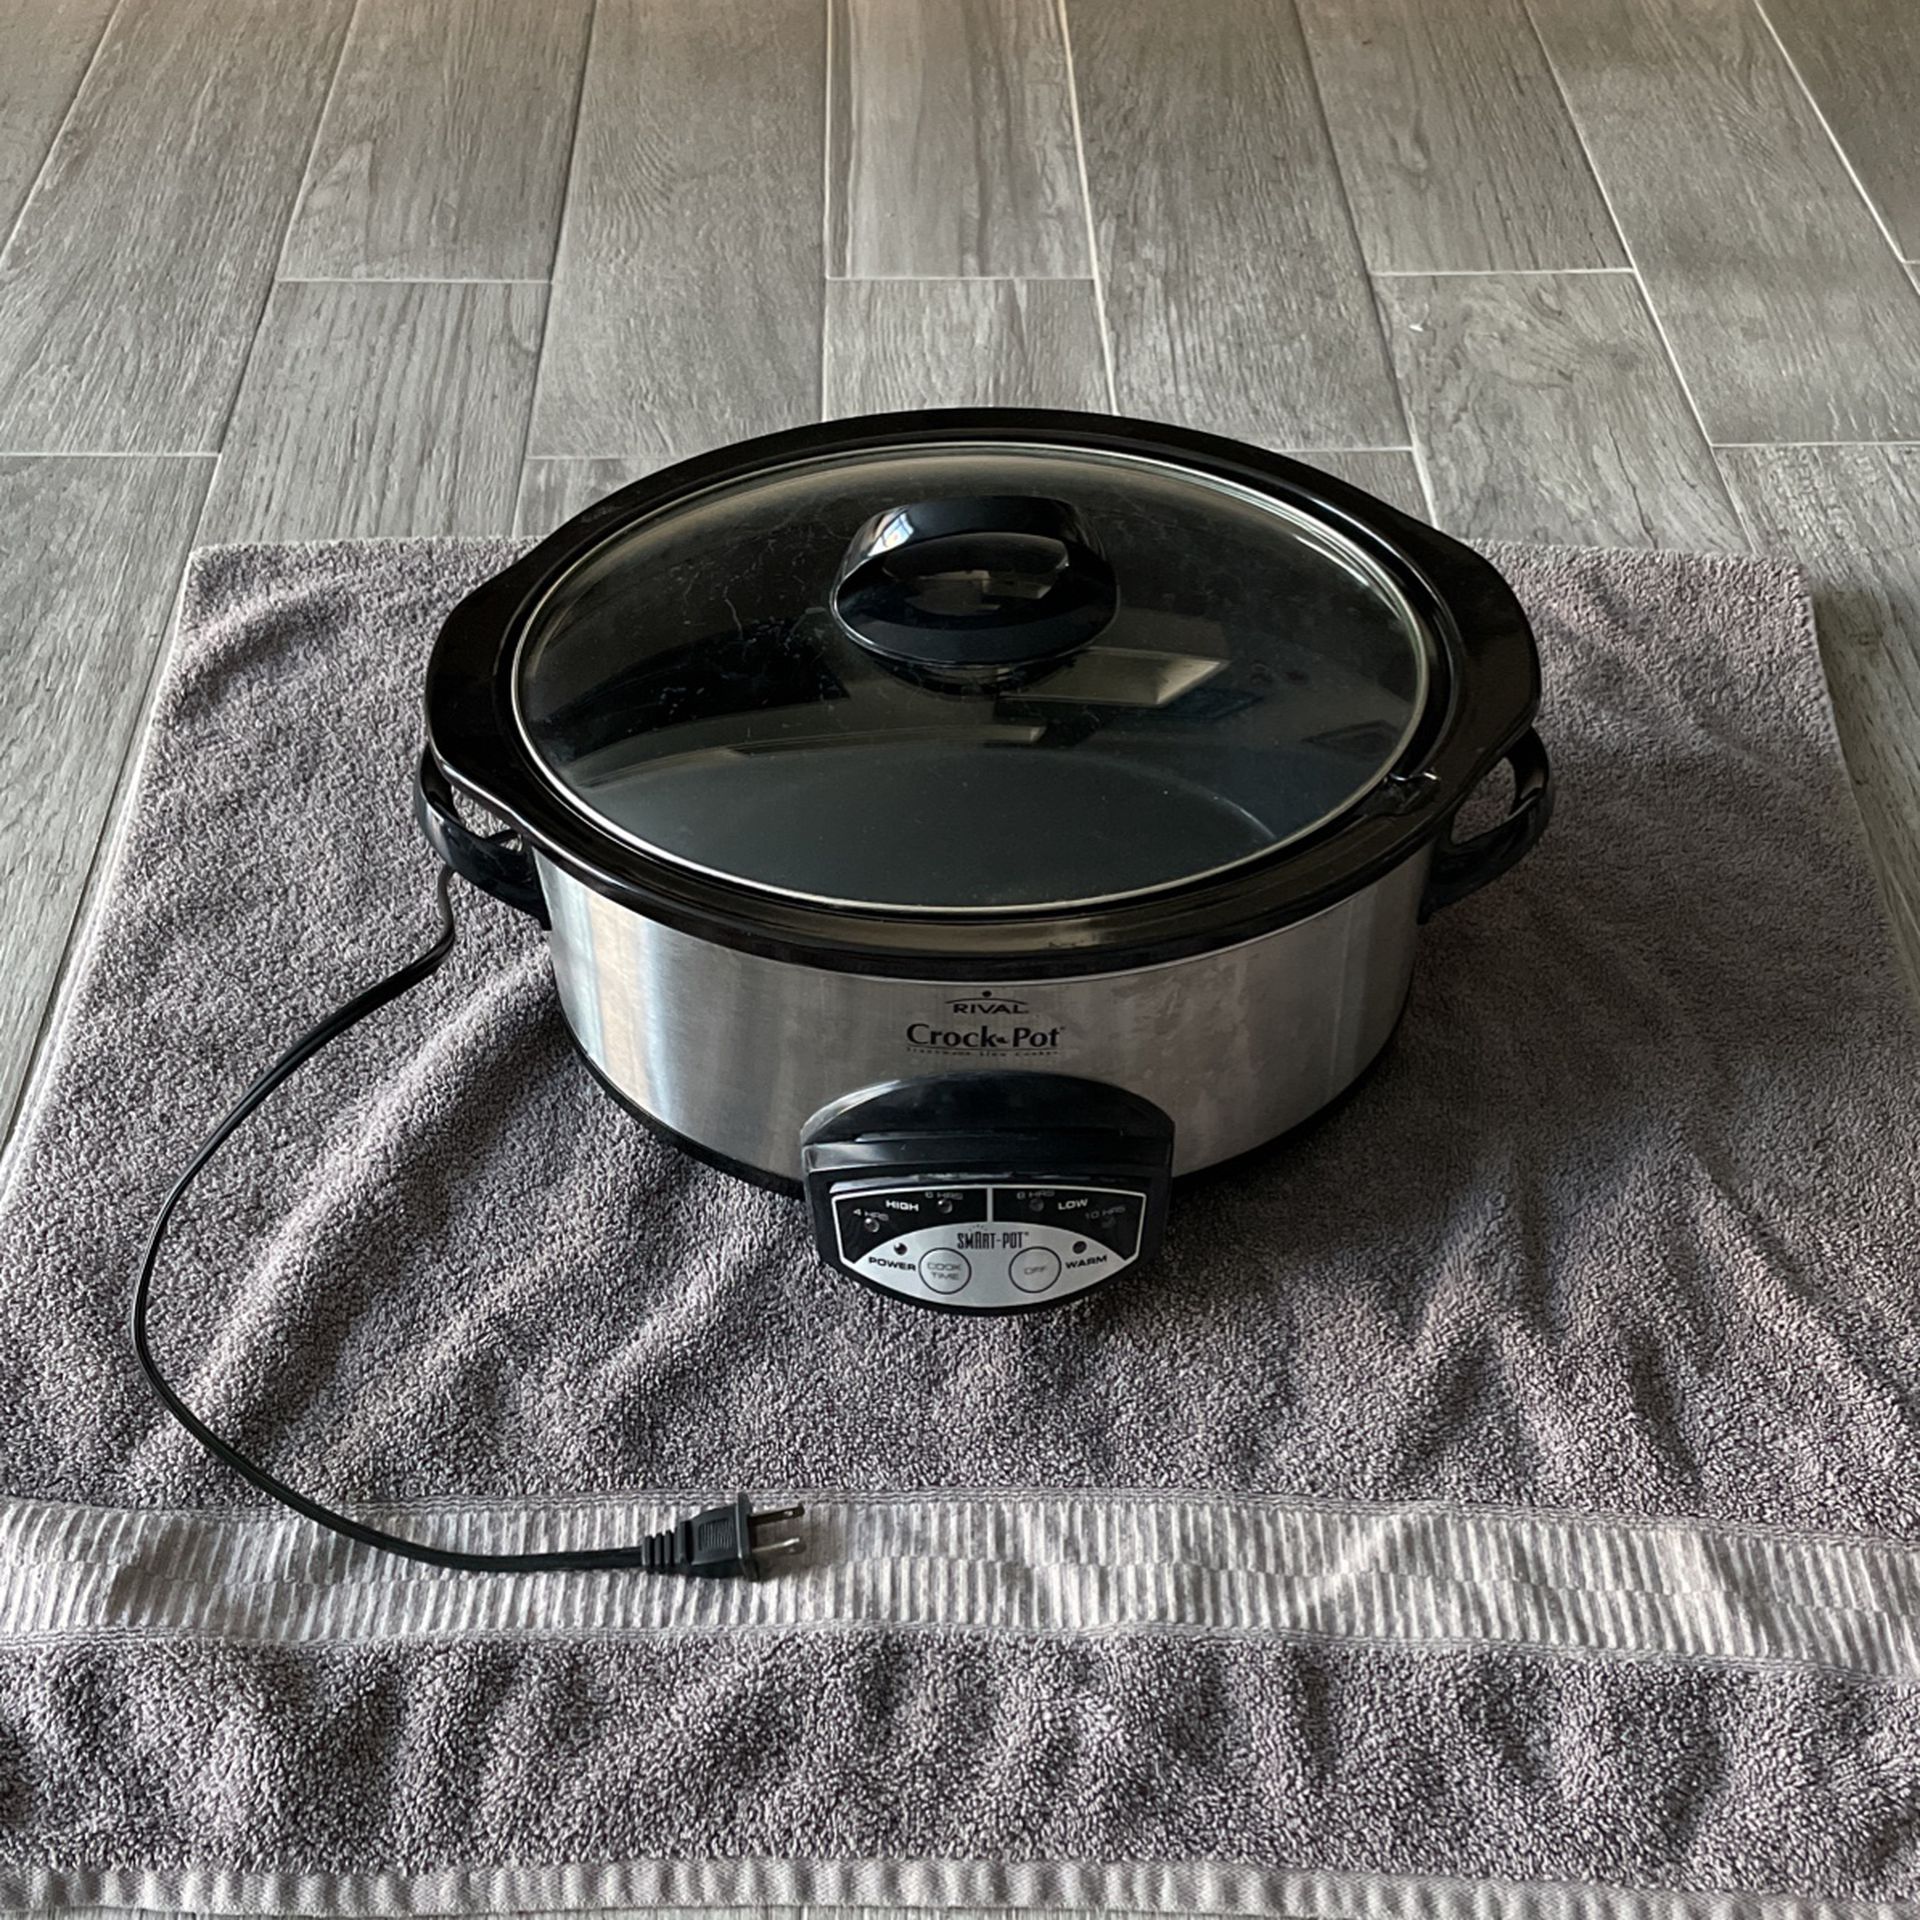 Rival Smart-Pot 6-Quart Slow Cooker 38601-C Reviews –